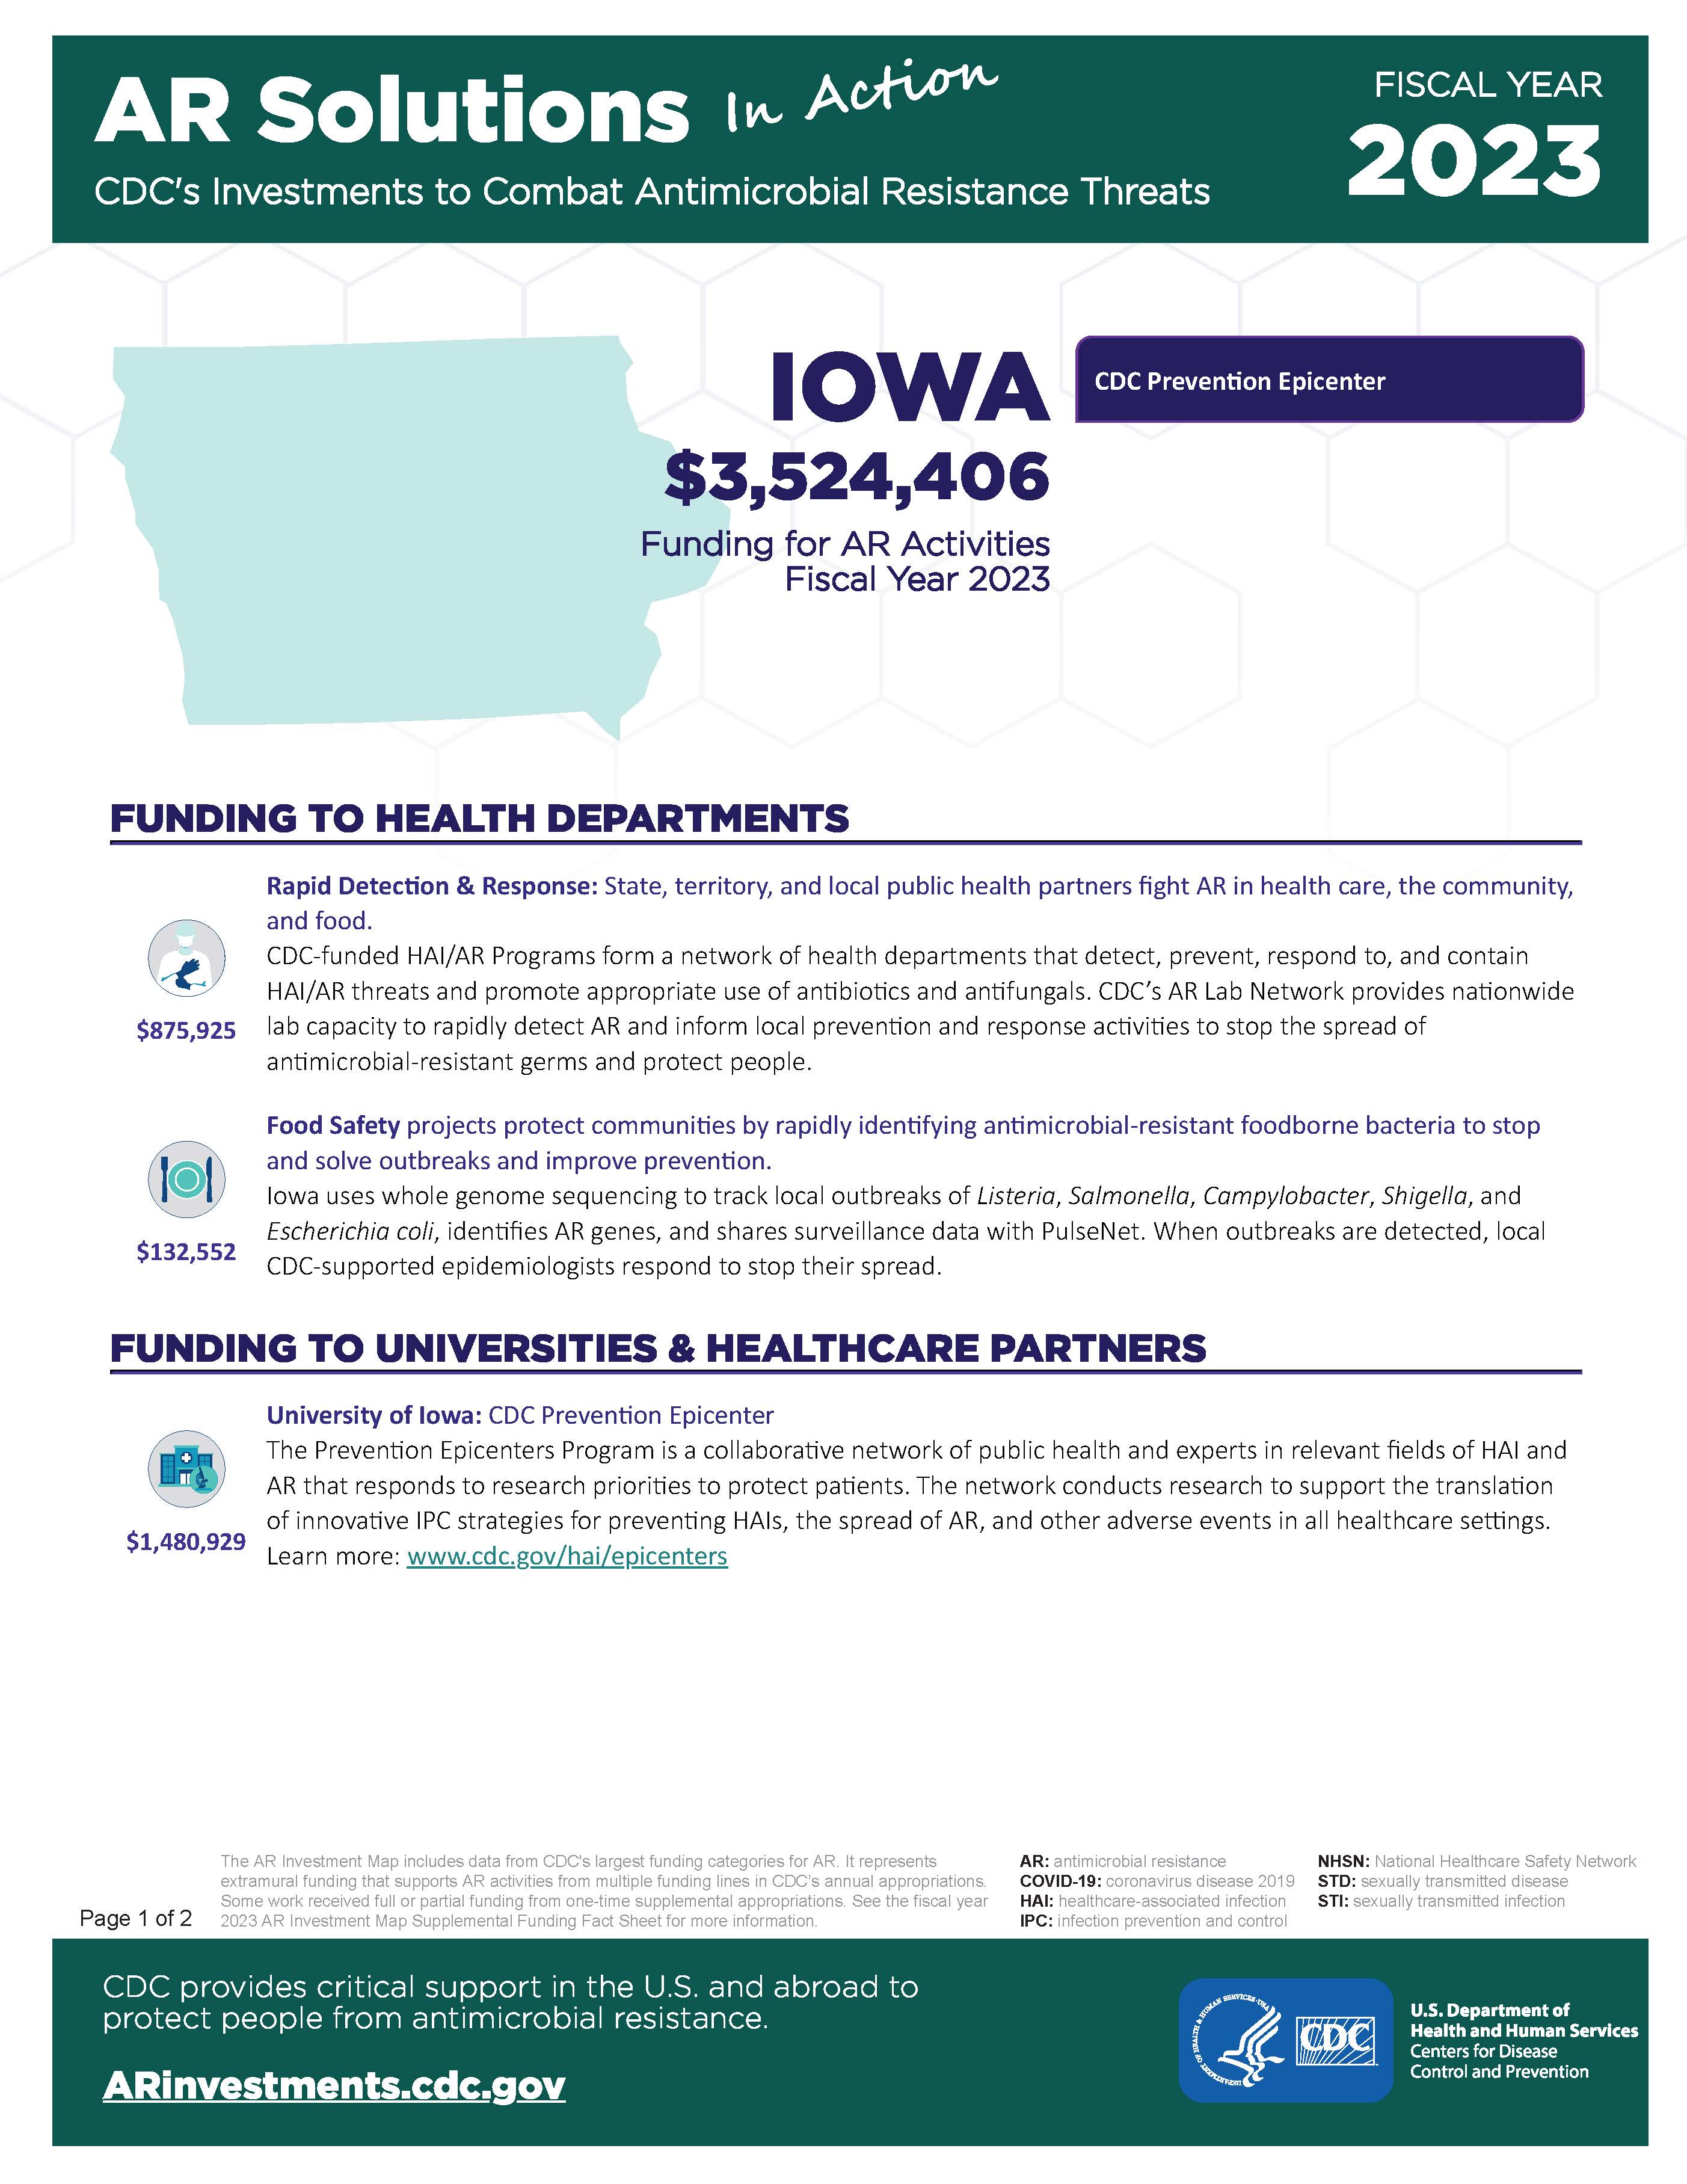 View Factsheet for Iowa